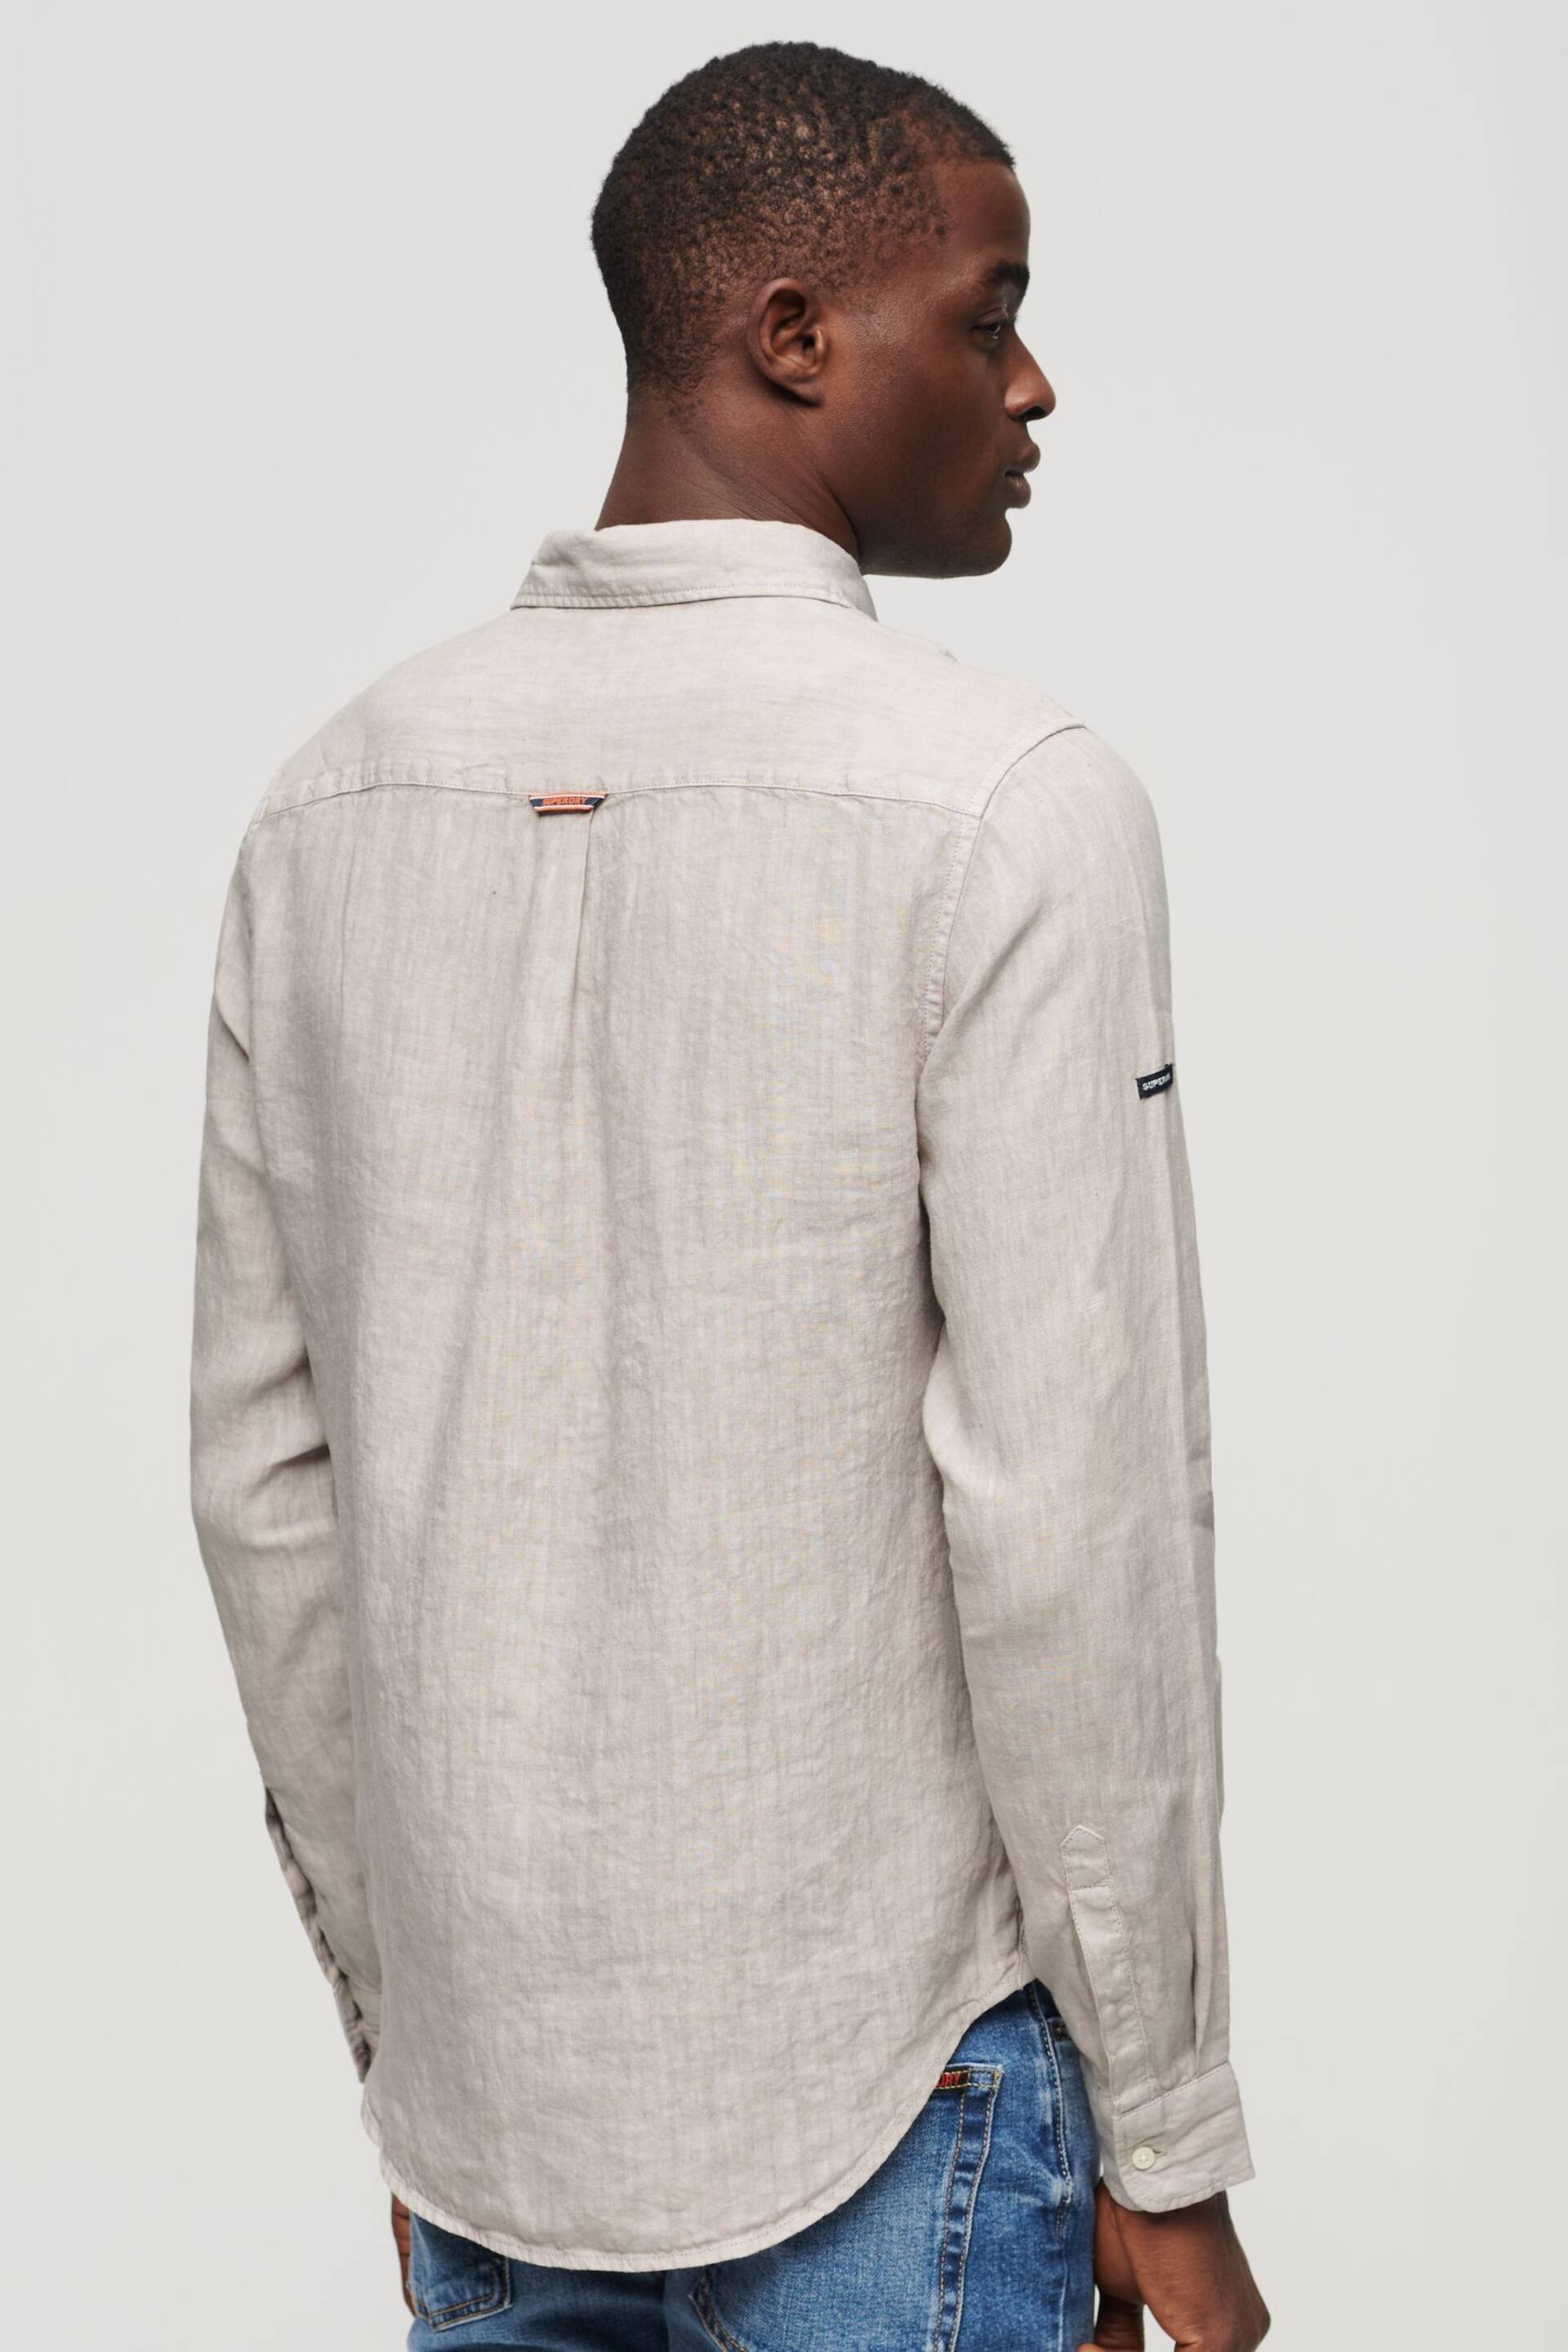 Superdry Ash Grey Studios Casual Linen Long Sleeved Shirt - Image 3 of 6